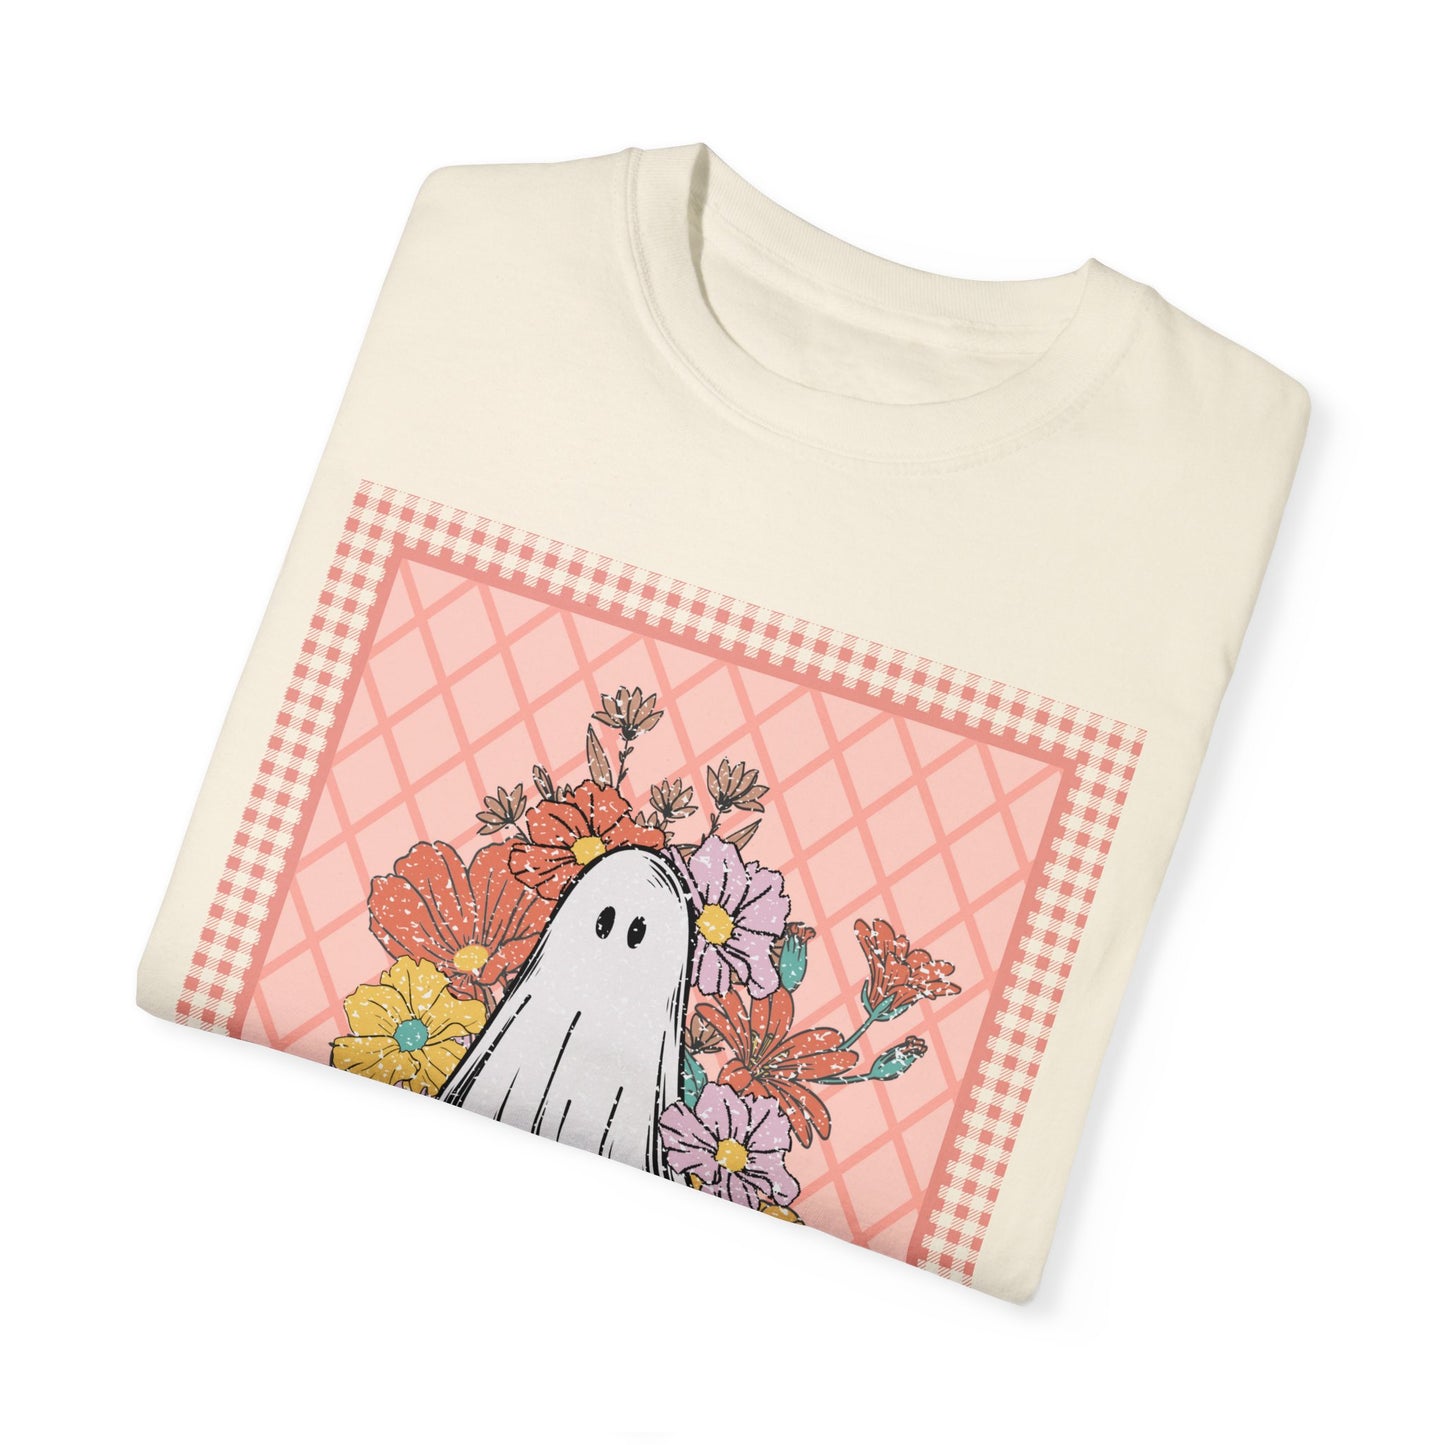 Retro Ghoul Pink Gingham Halloween Woman Tee | Western Halloween T-Shirt Women Funny Ghost Graphic Print Shirt Tee Top